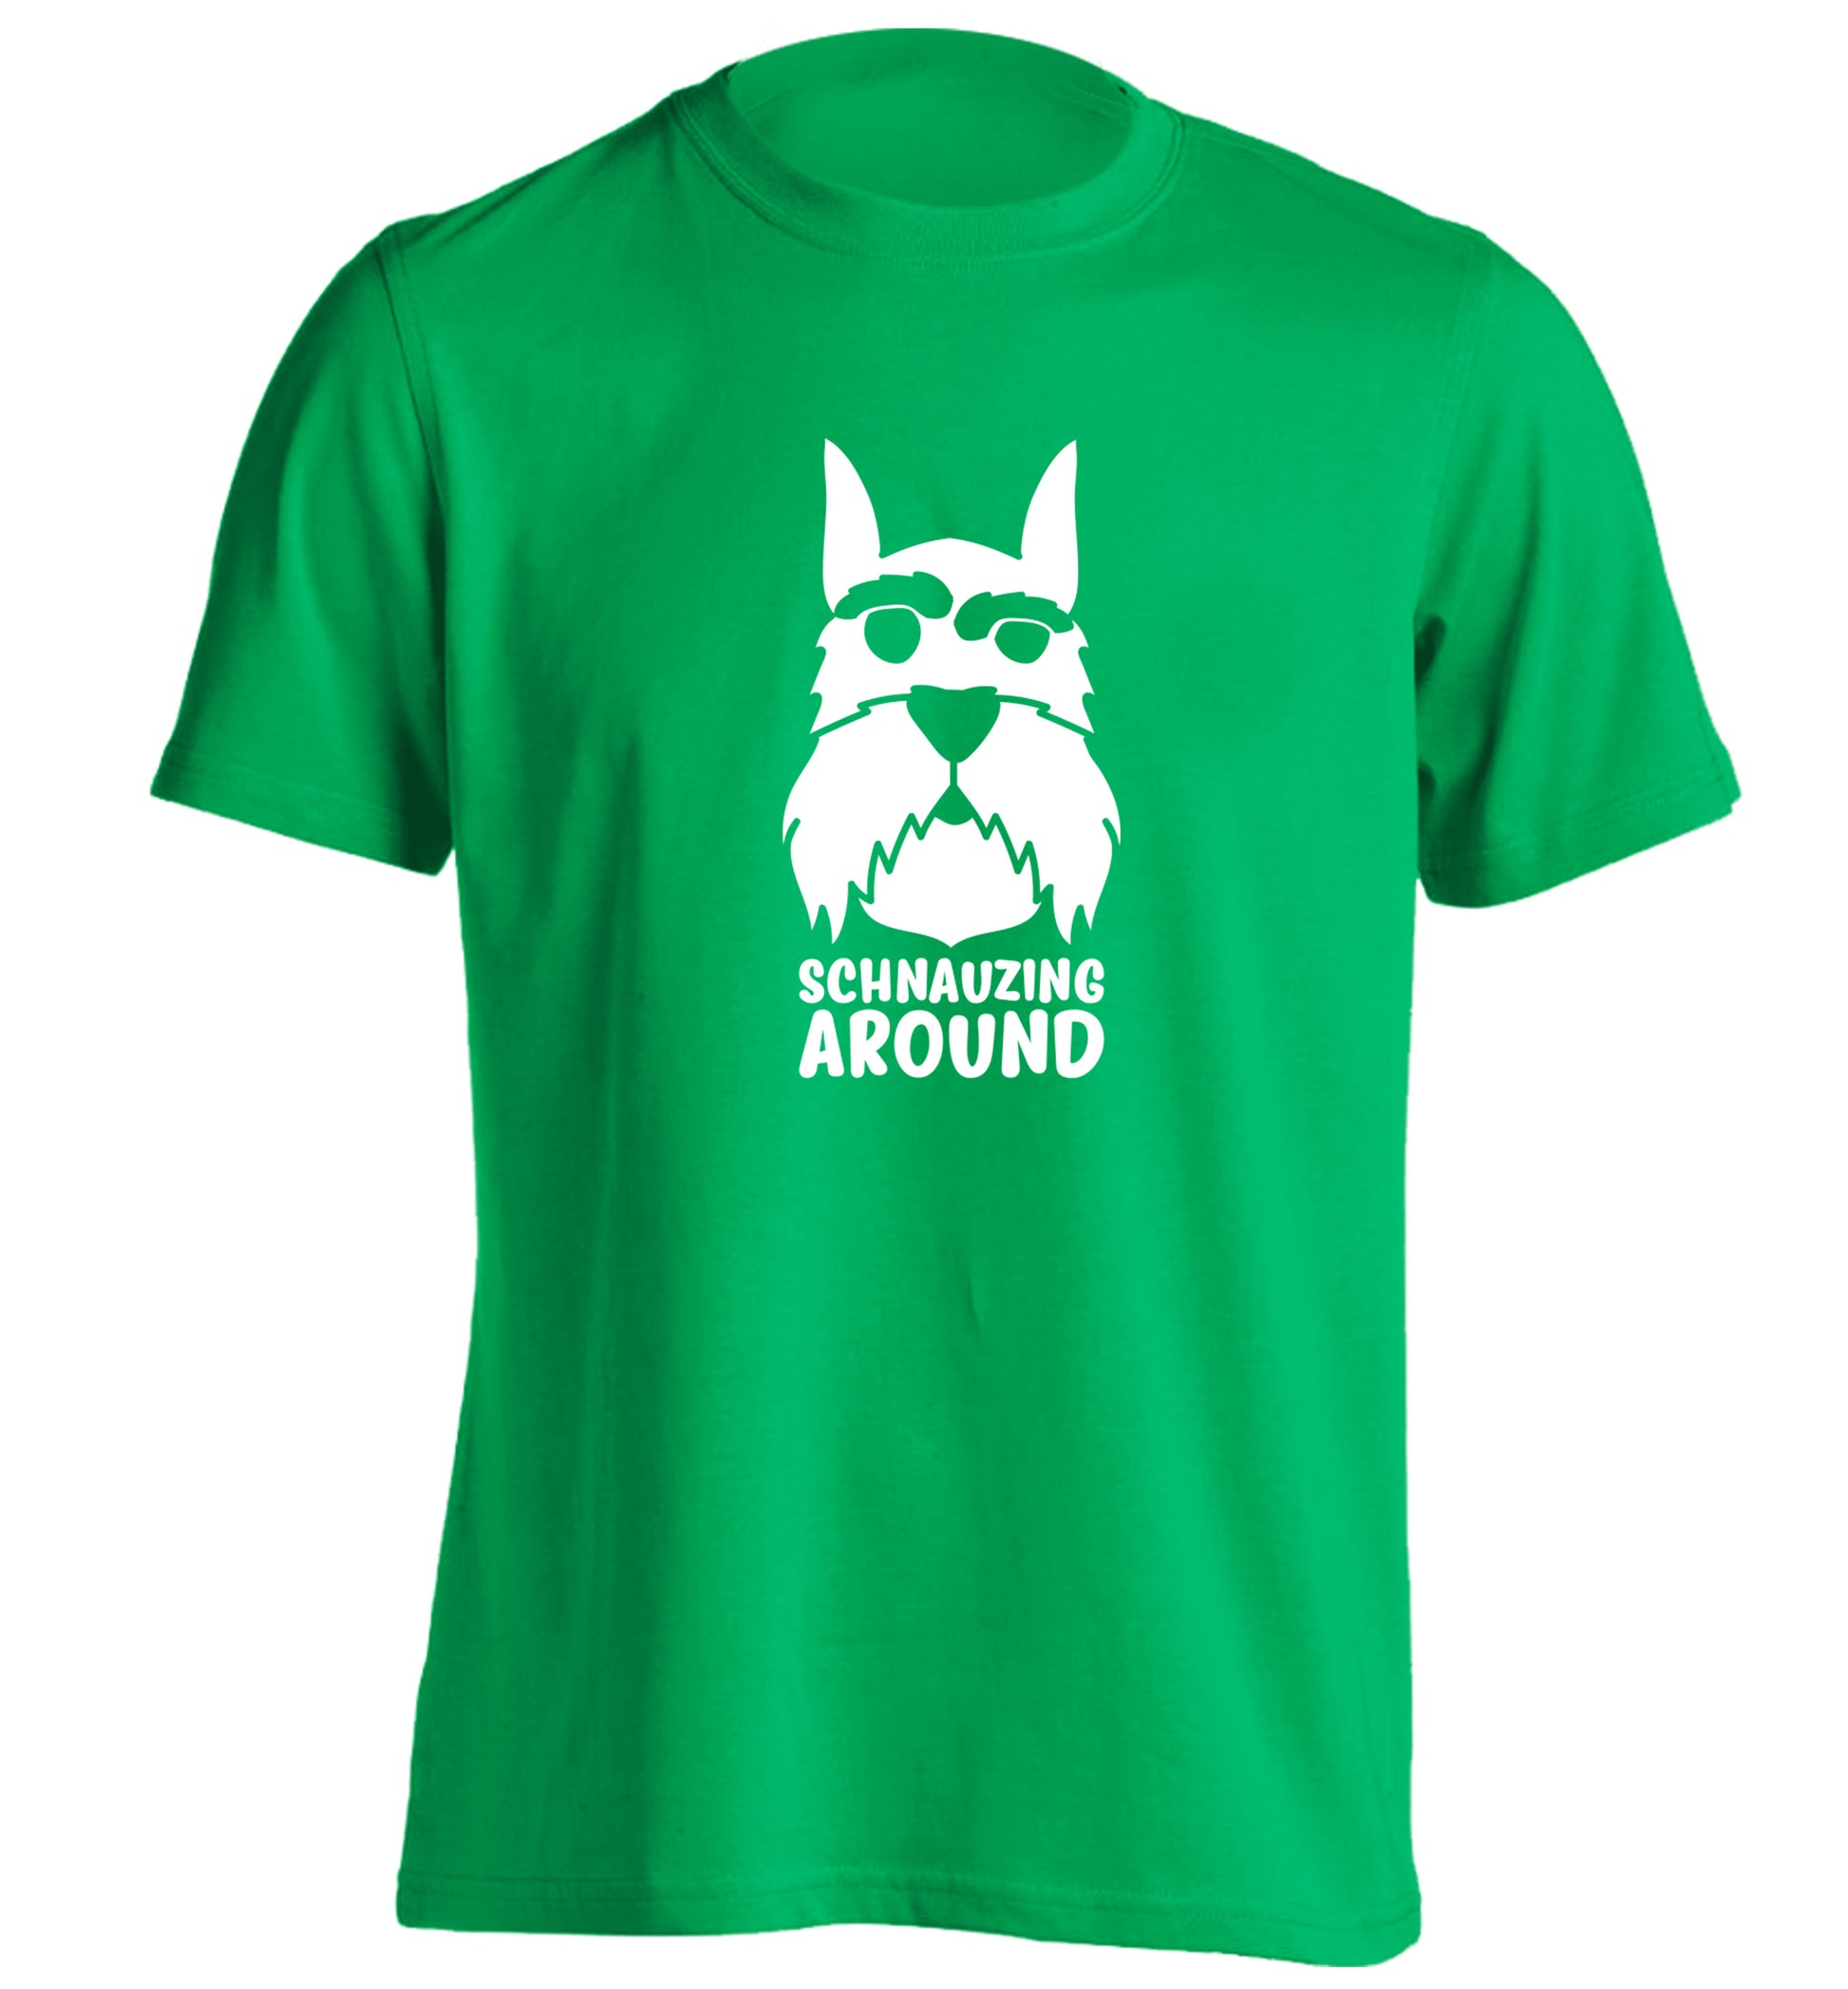 Schnauzing Around adults unisex green Tshirt 2XL